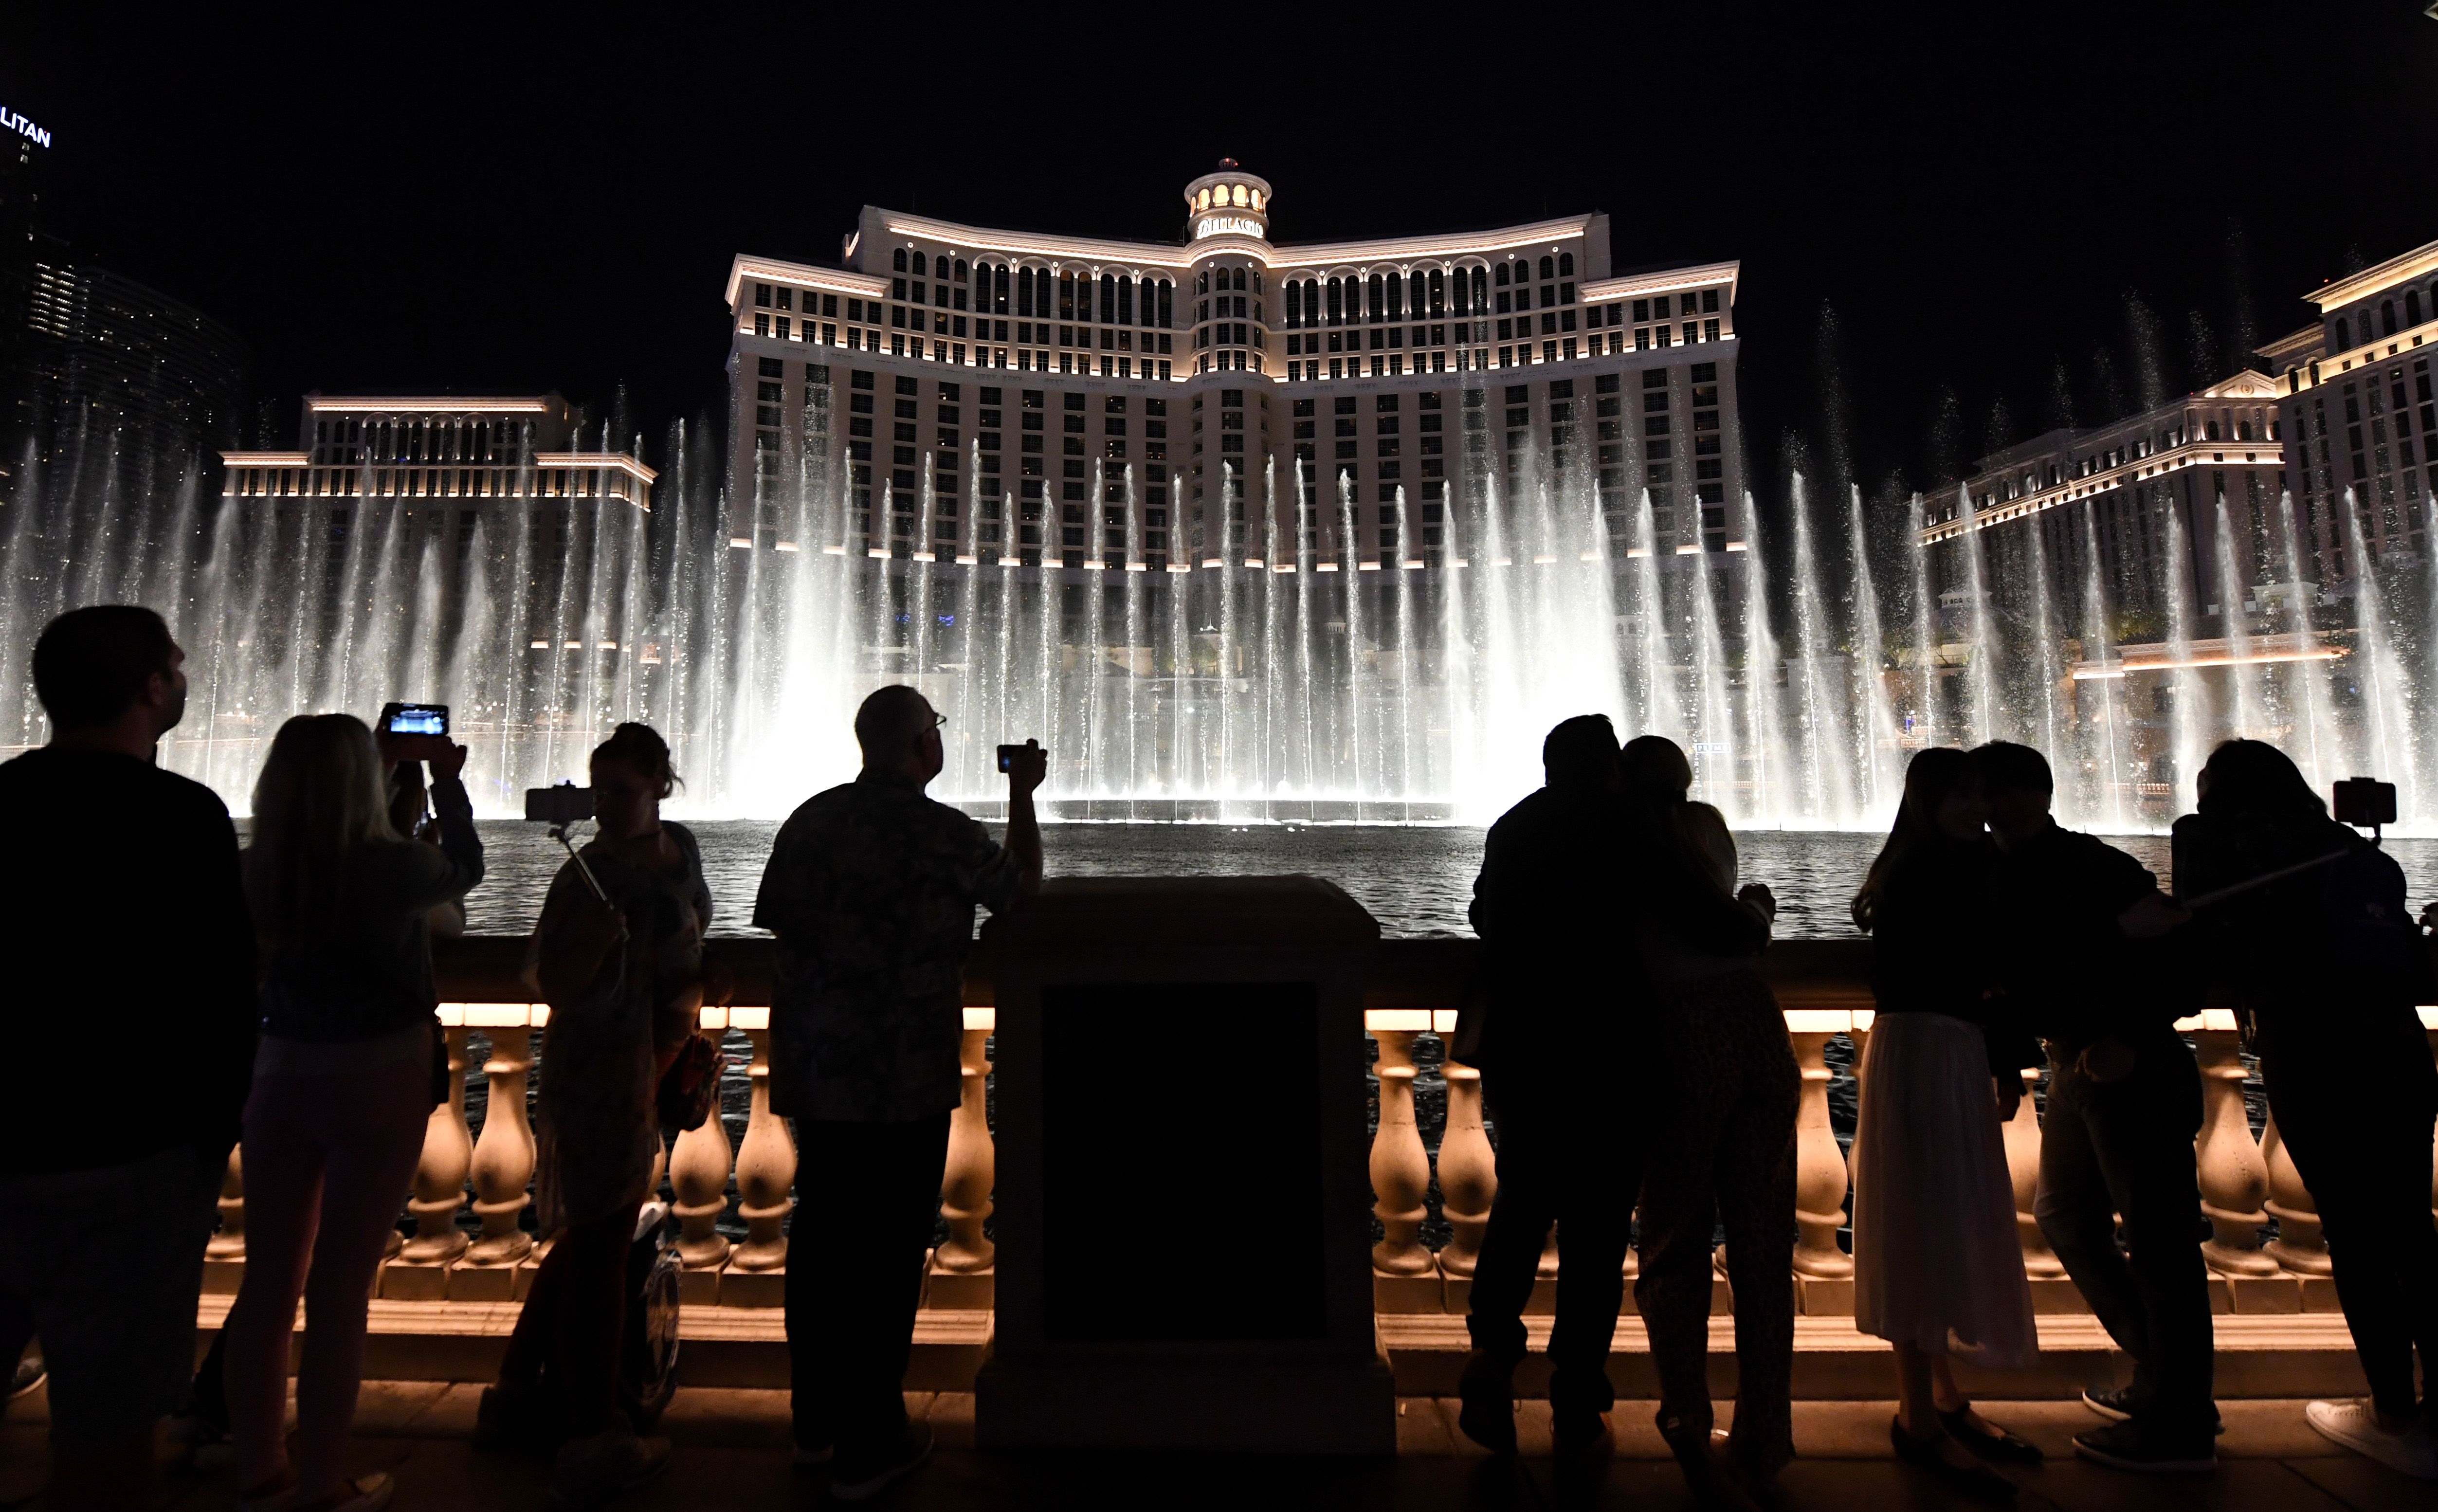 Blackstone's Bellagio Deal Values Las Vegas Hotel at $5 Billion